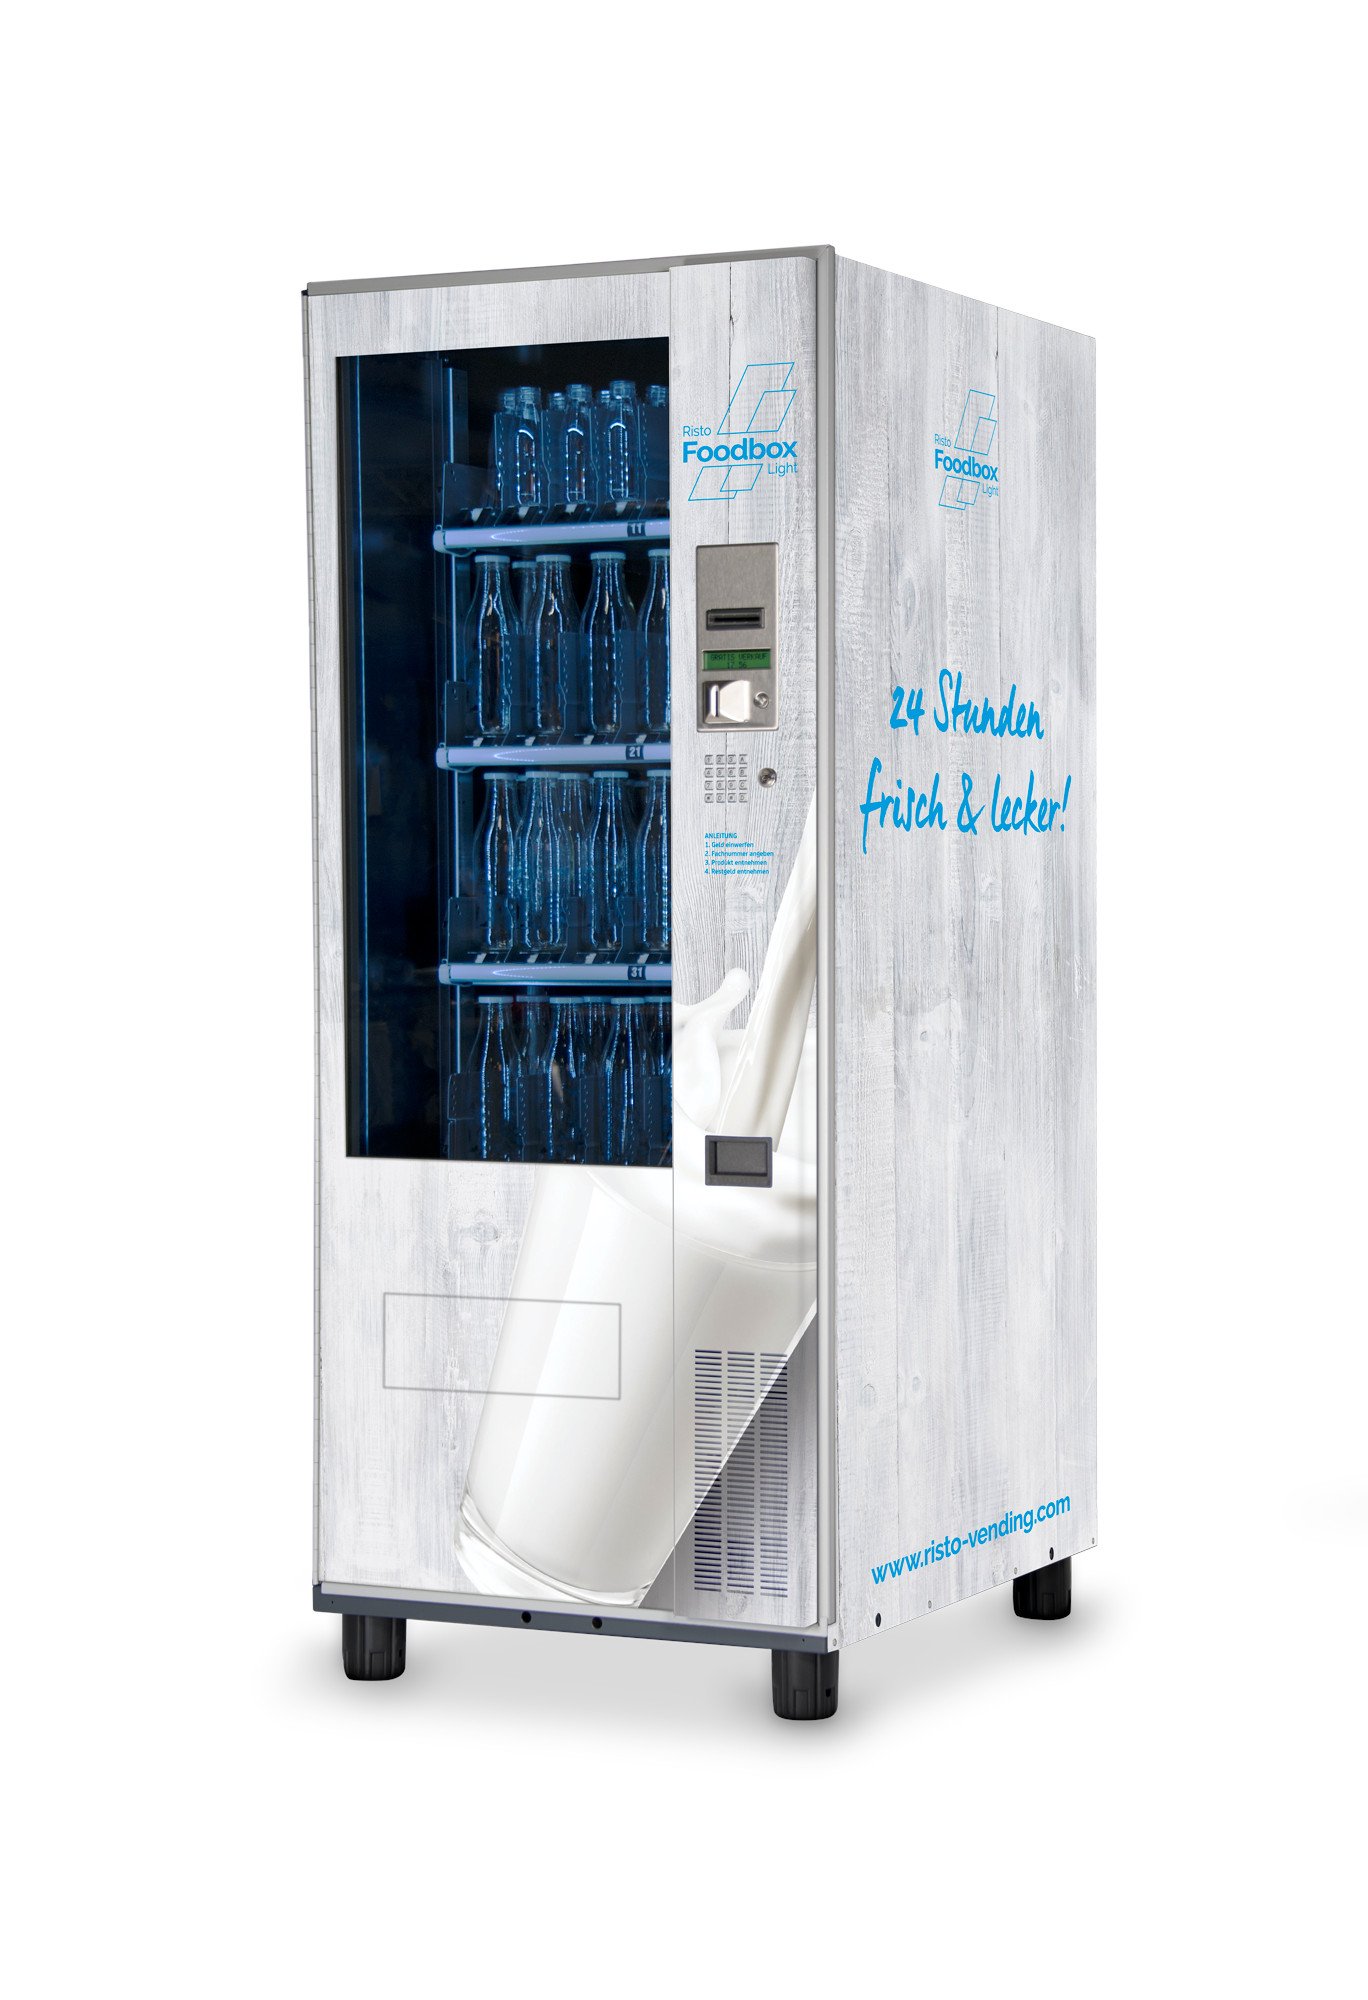 Foodbox Light Flaschenautomat-Warenautomat-Foodbox-Light-Bottle-Vending-Machine-Weiss